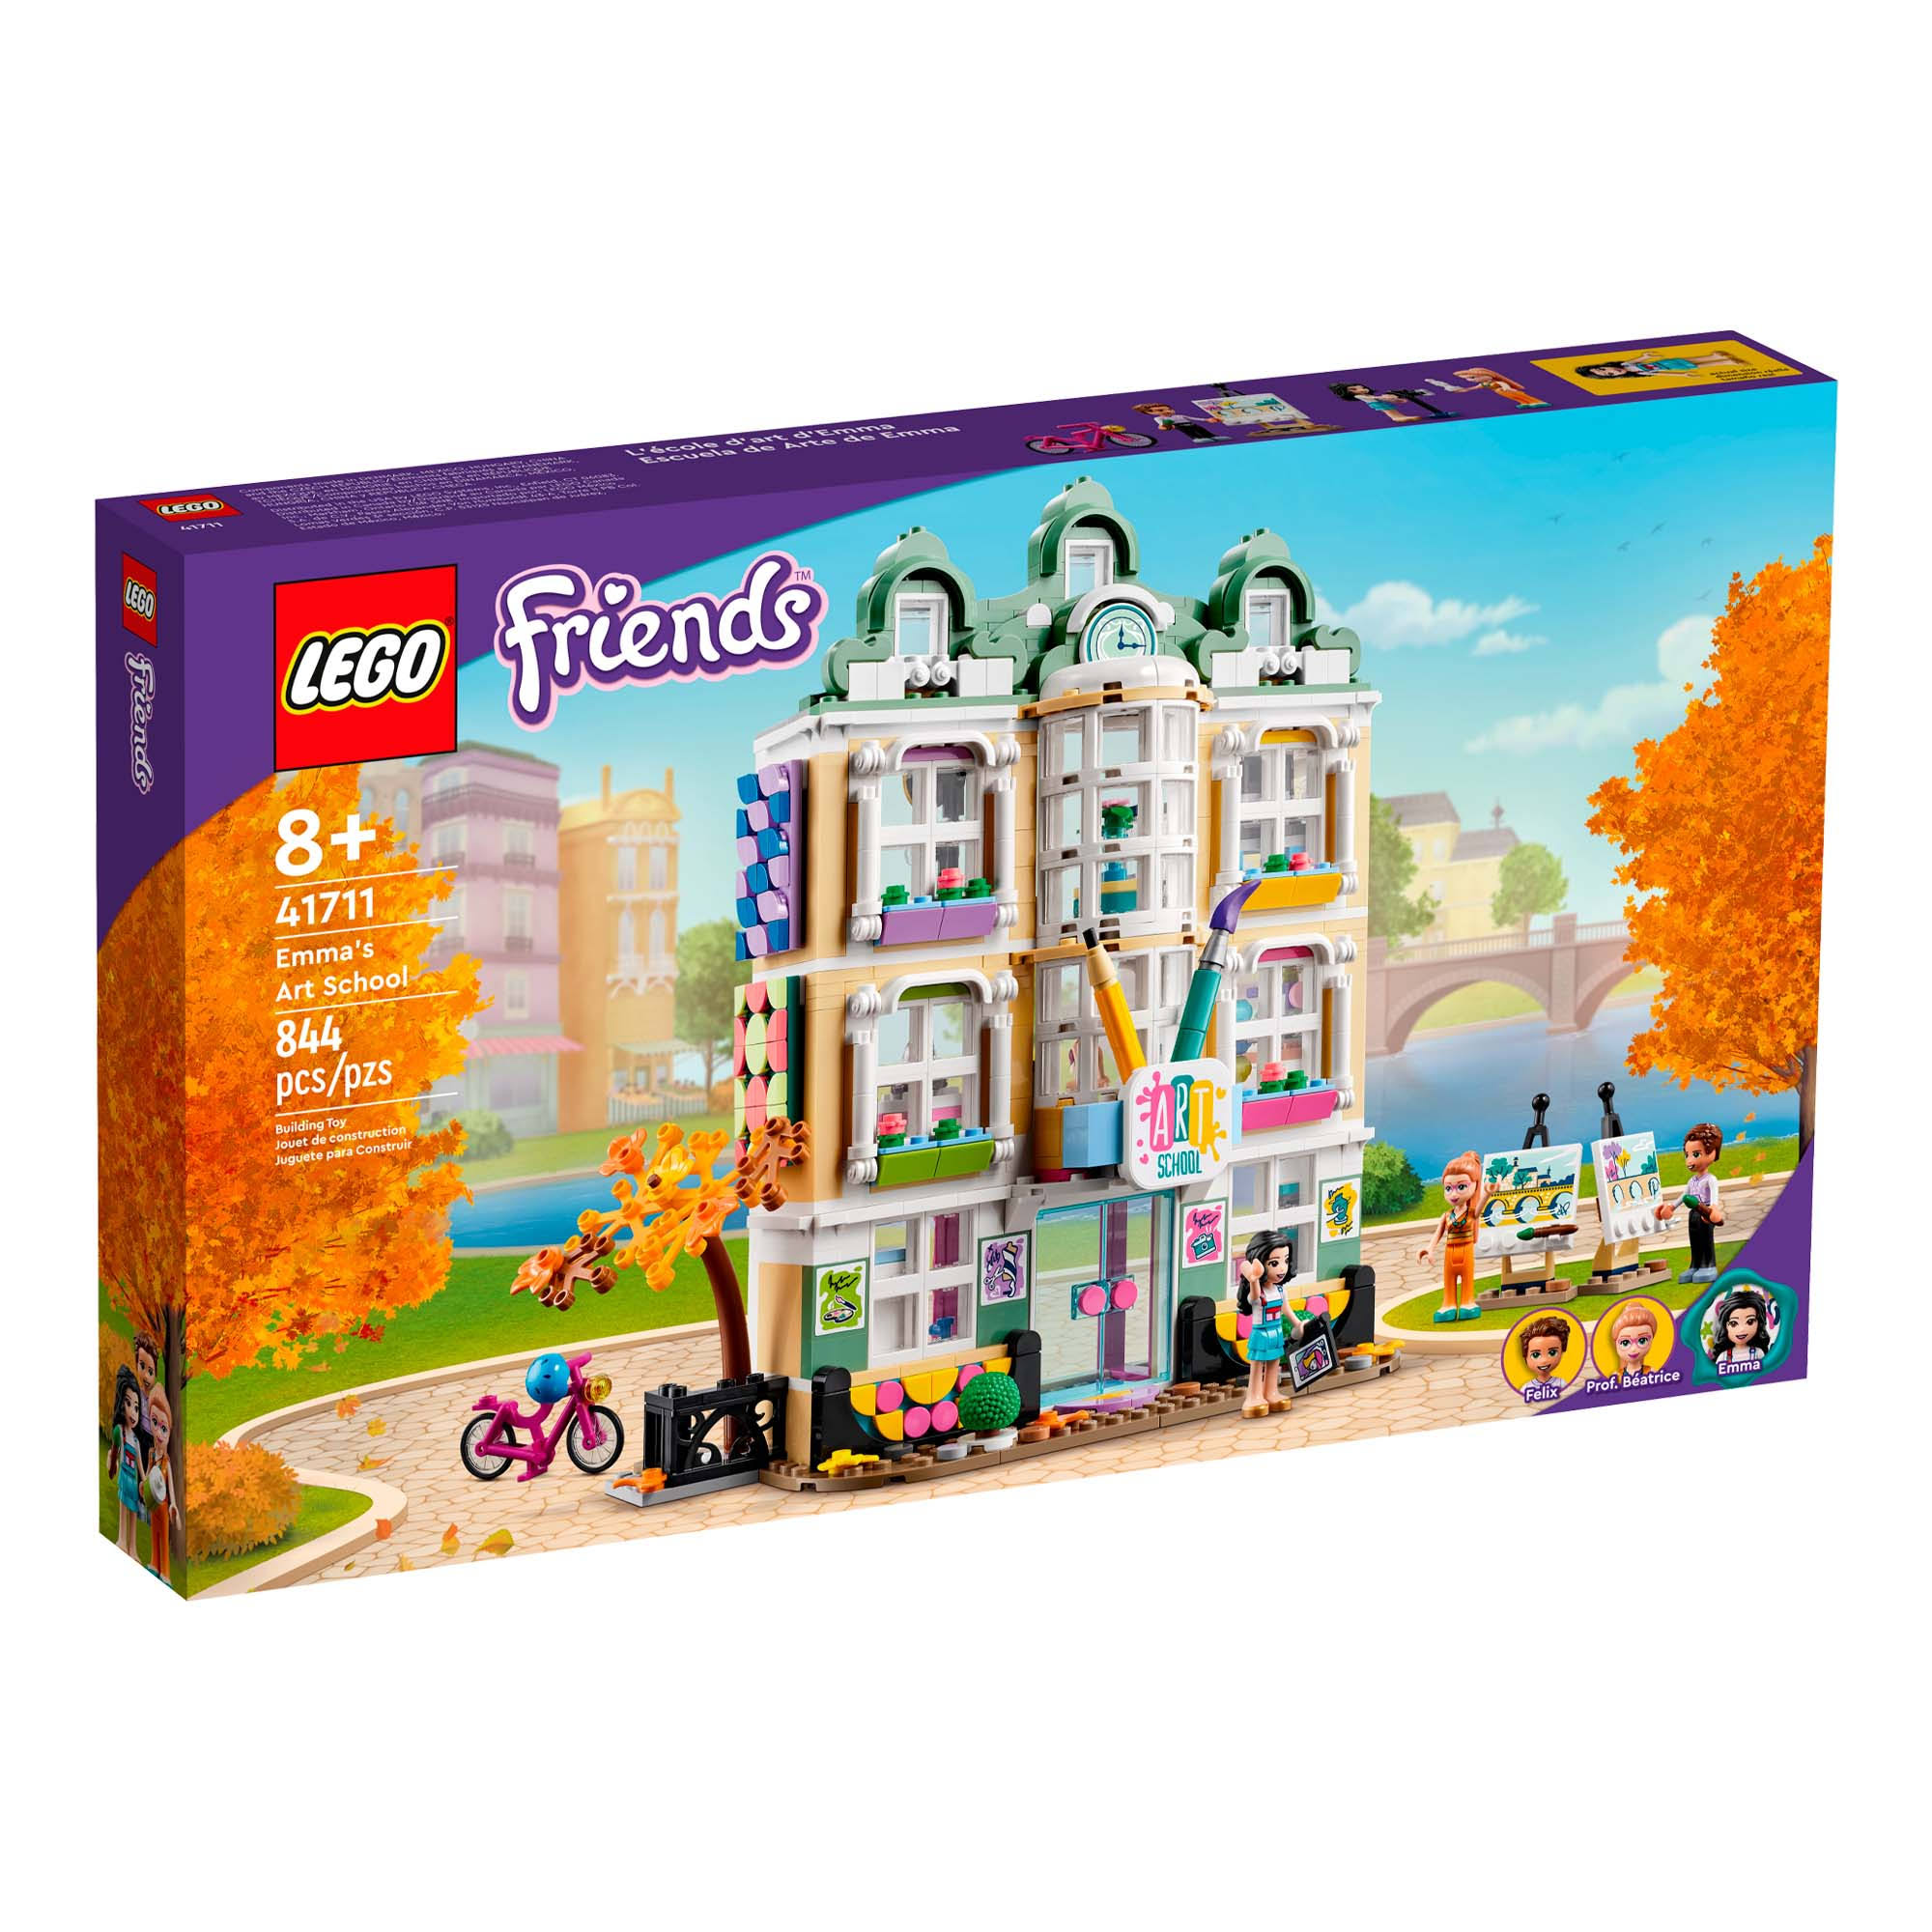 LEGO Friends Emma's Art School 41711 [New Toy] Brick